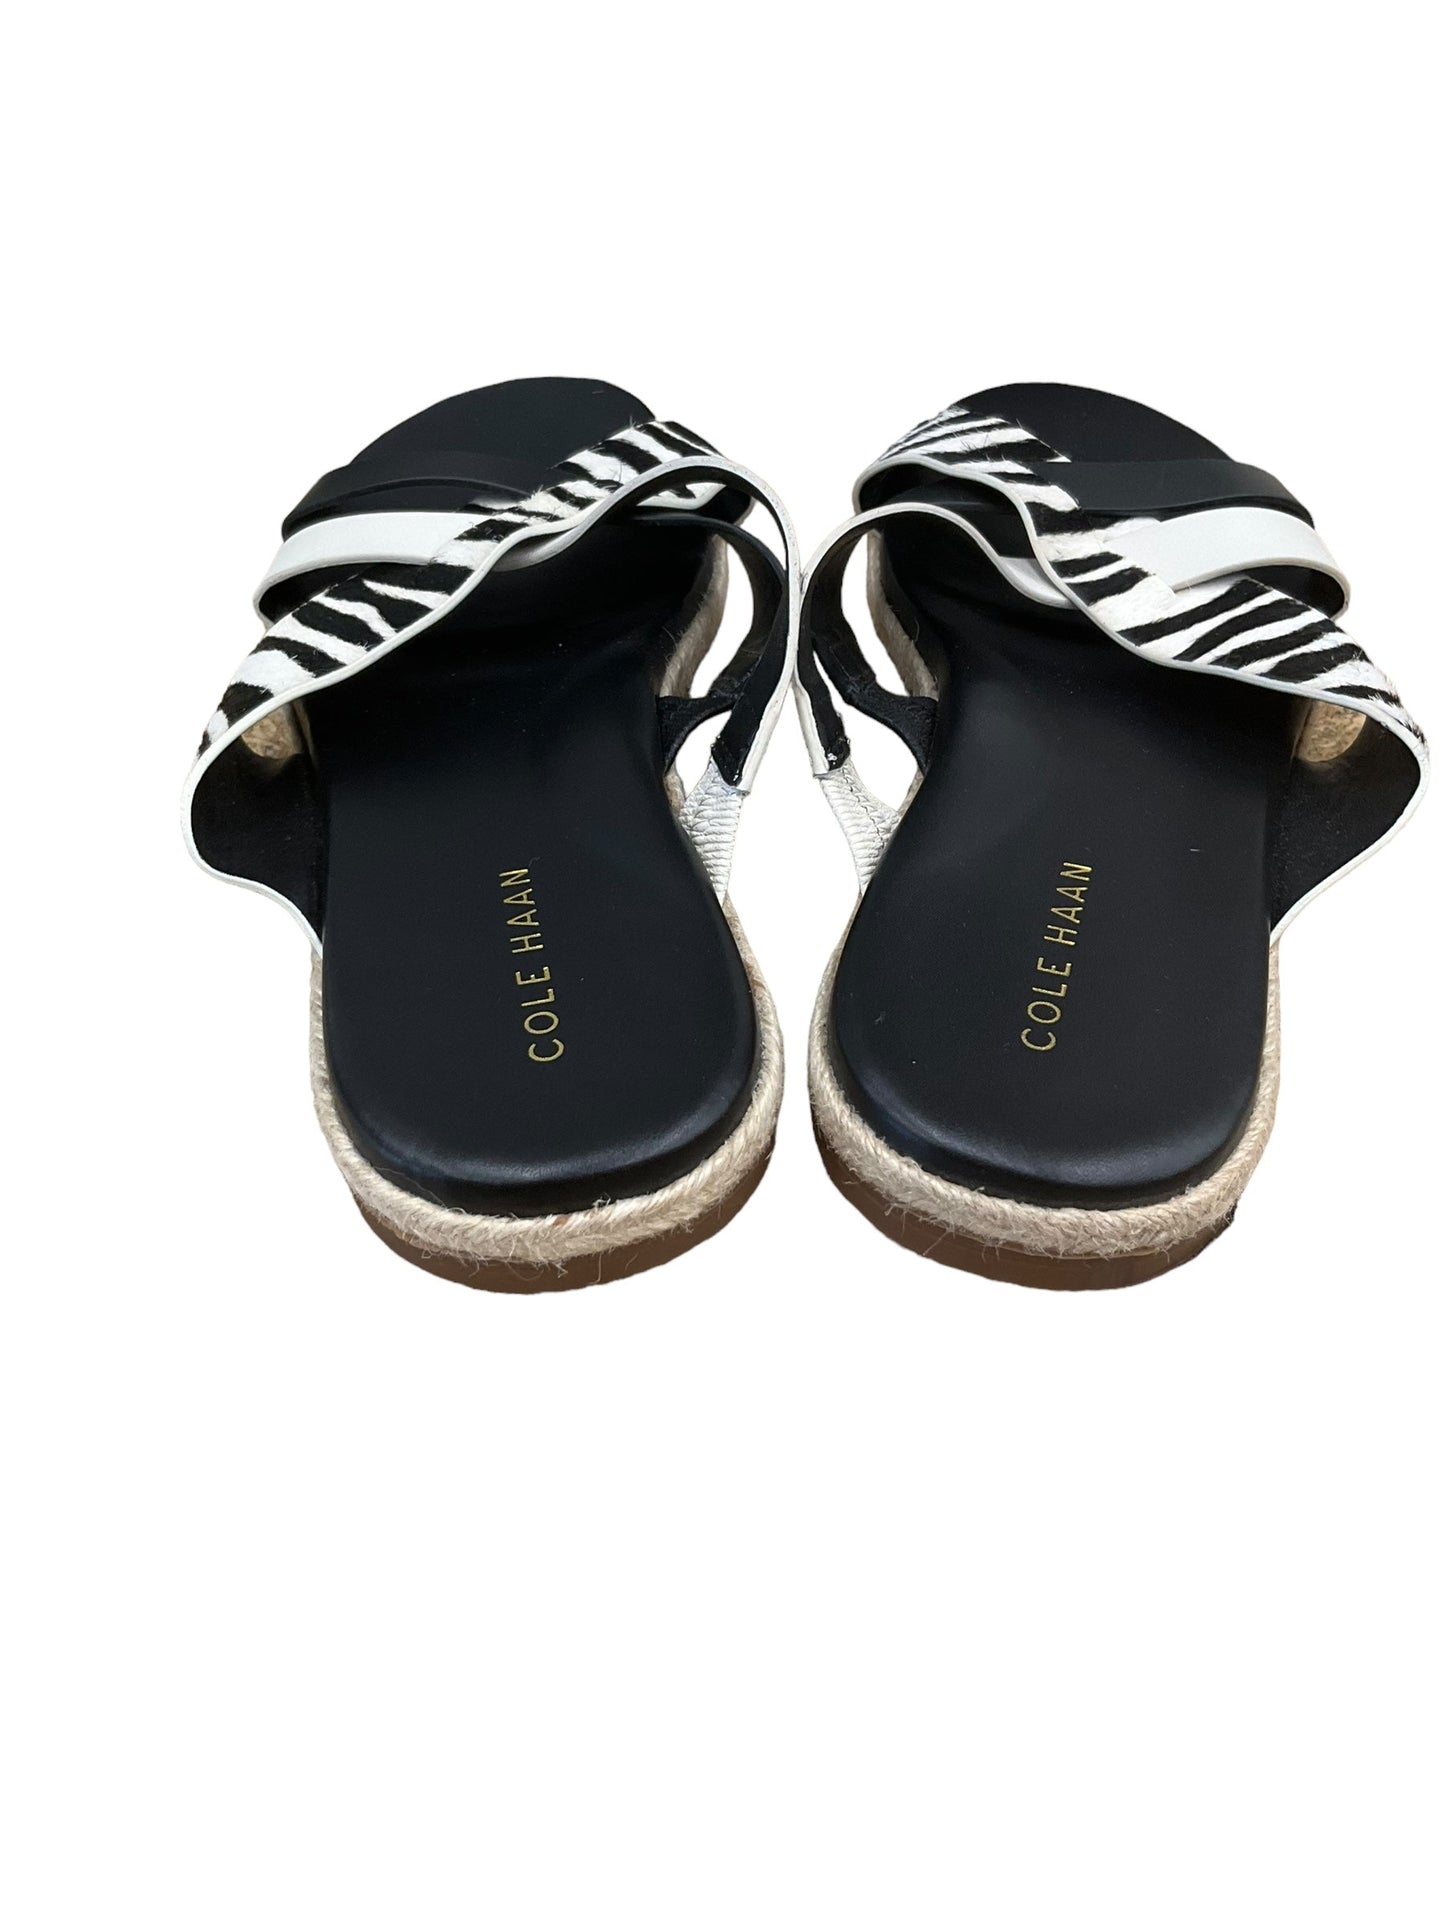 Zebra Print Sandals Flats Cole-haan, Size 5.5